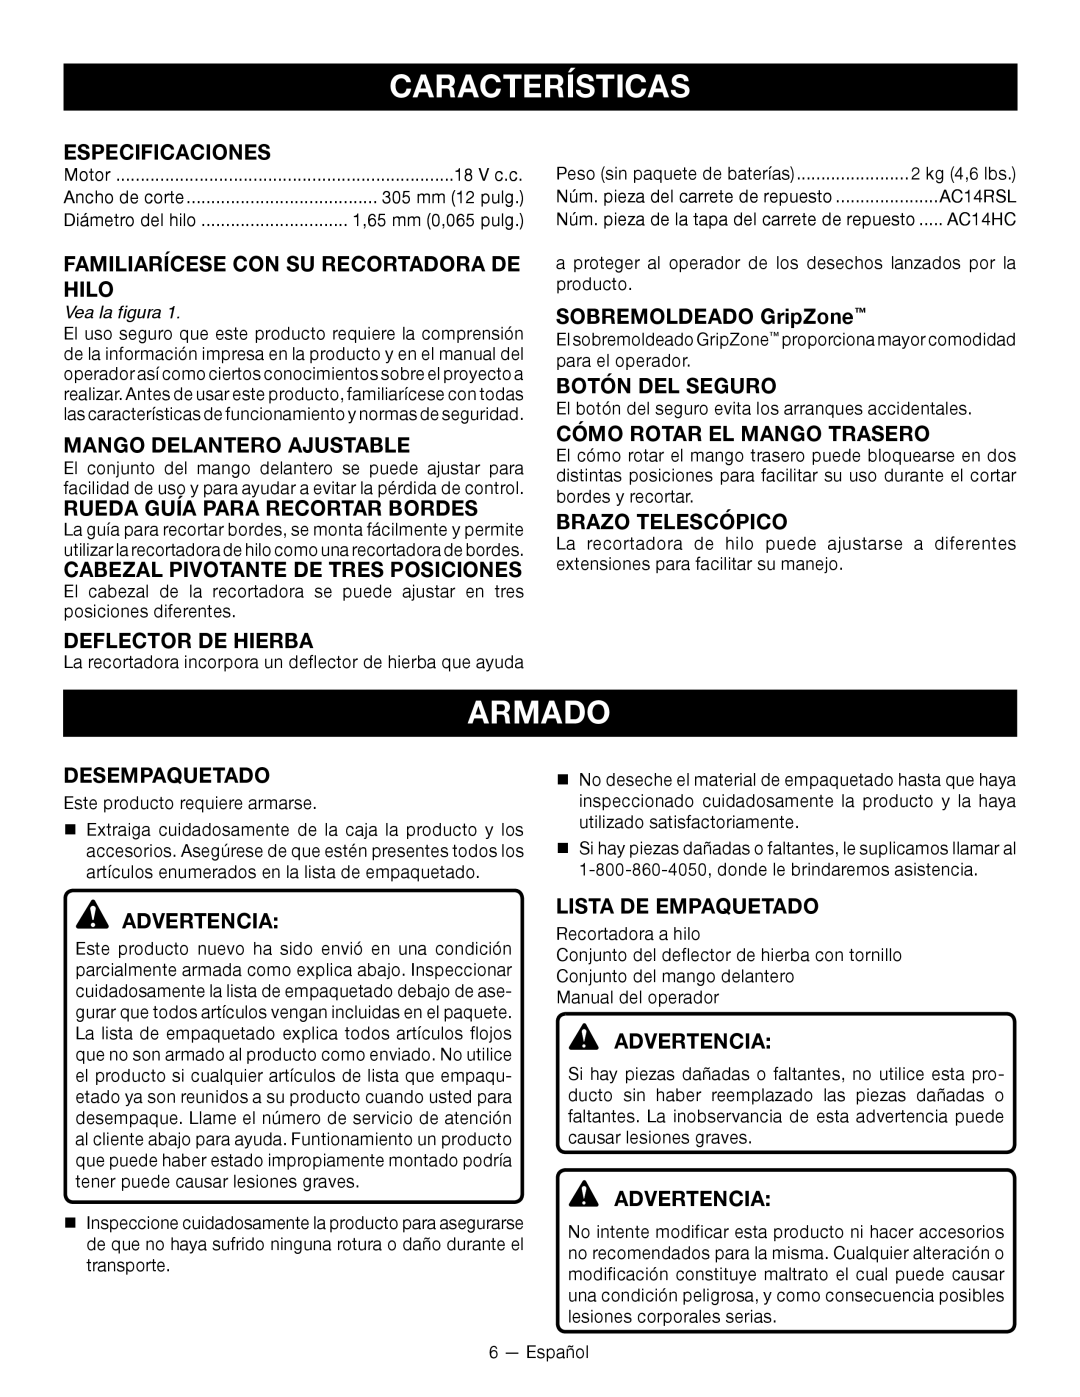 Ryobi P2005 manuel dutilisation Características, Armado 